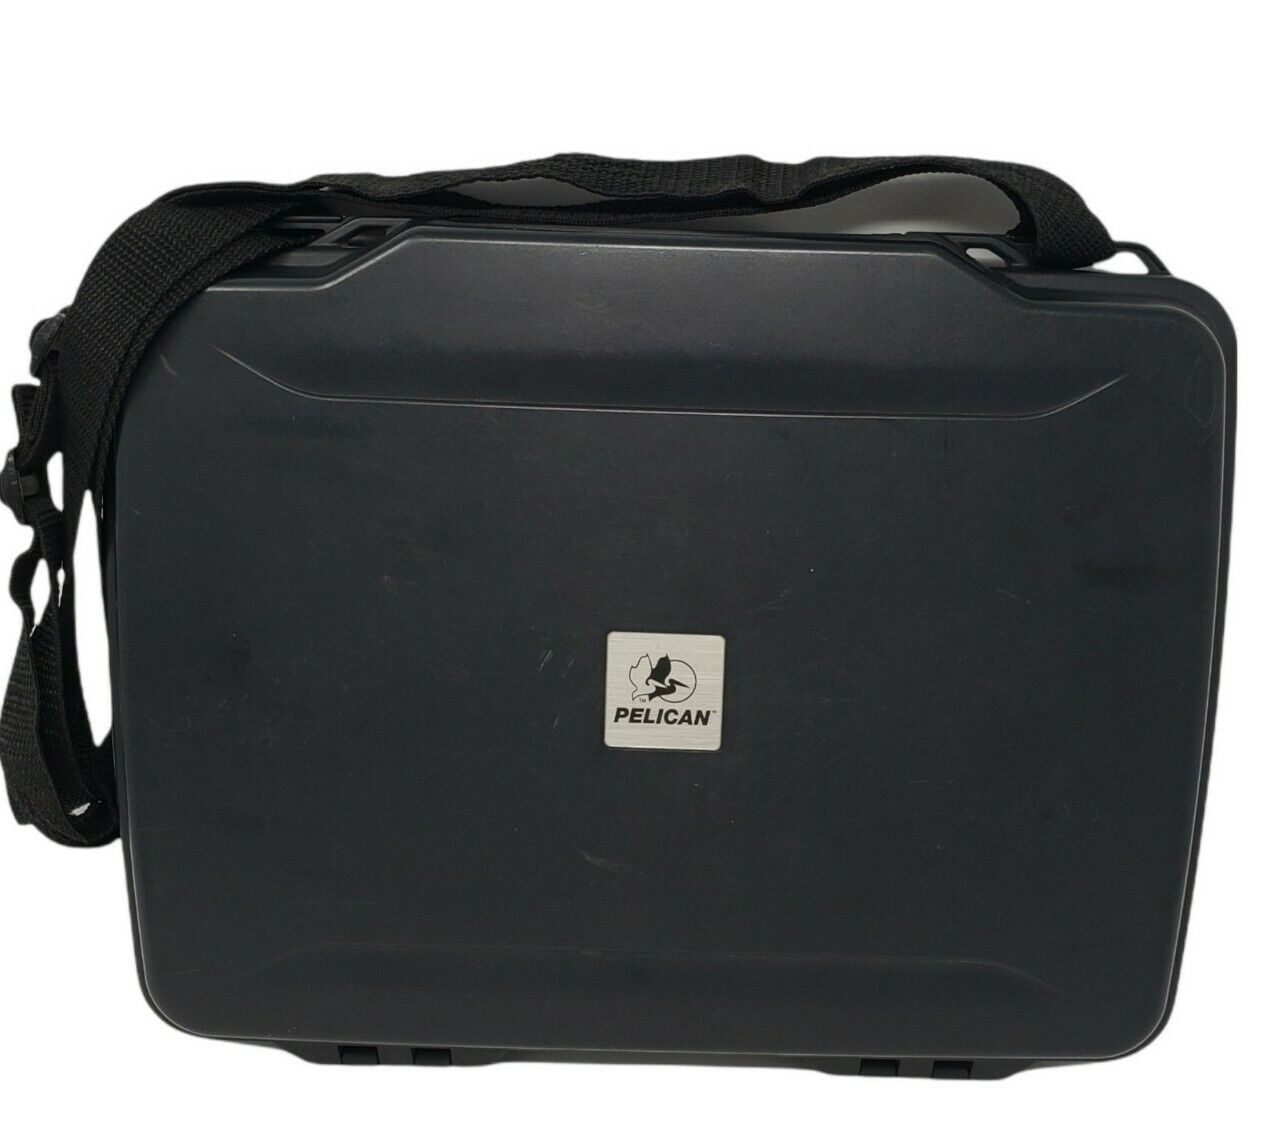 Pelican 1075 Case Tablet Netbook Tech Padded Adj. Strap Black Polymer Hardshell